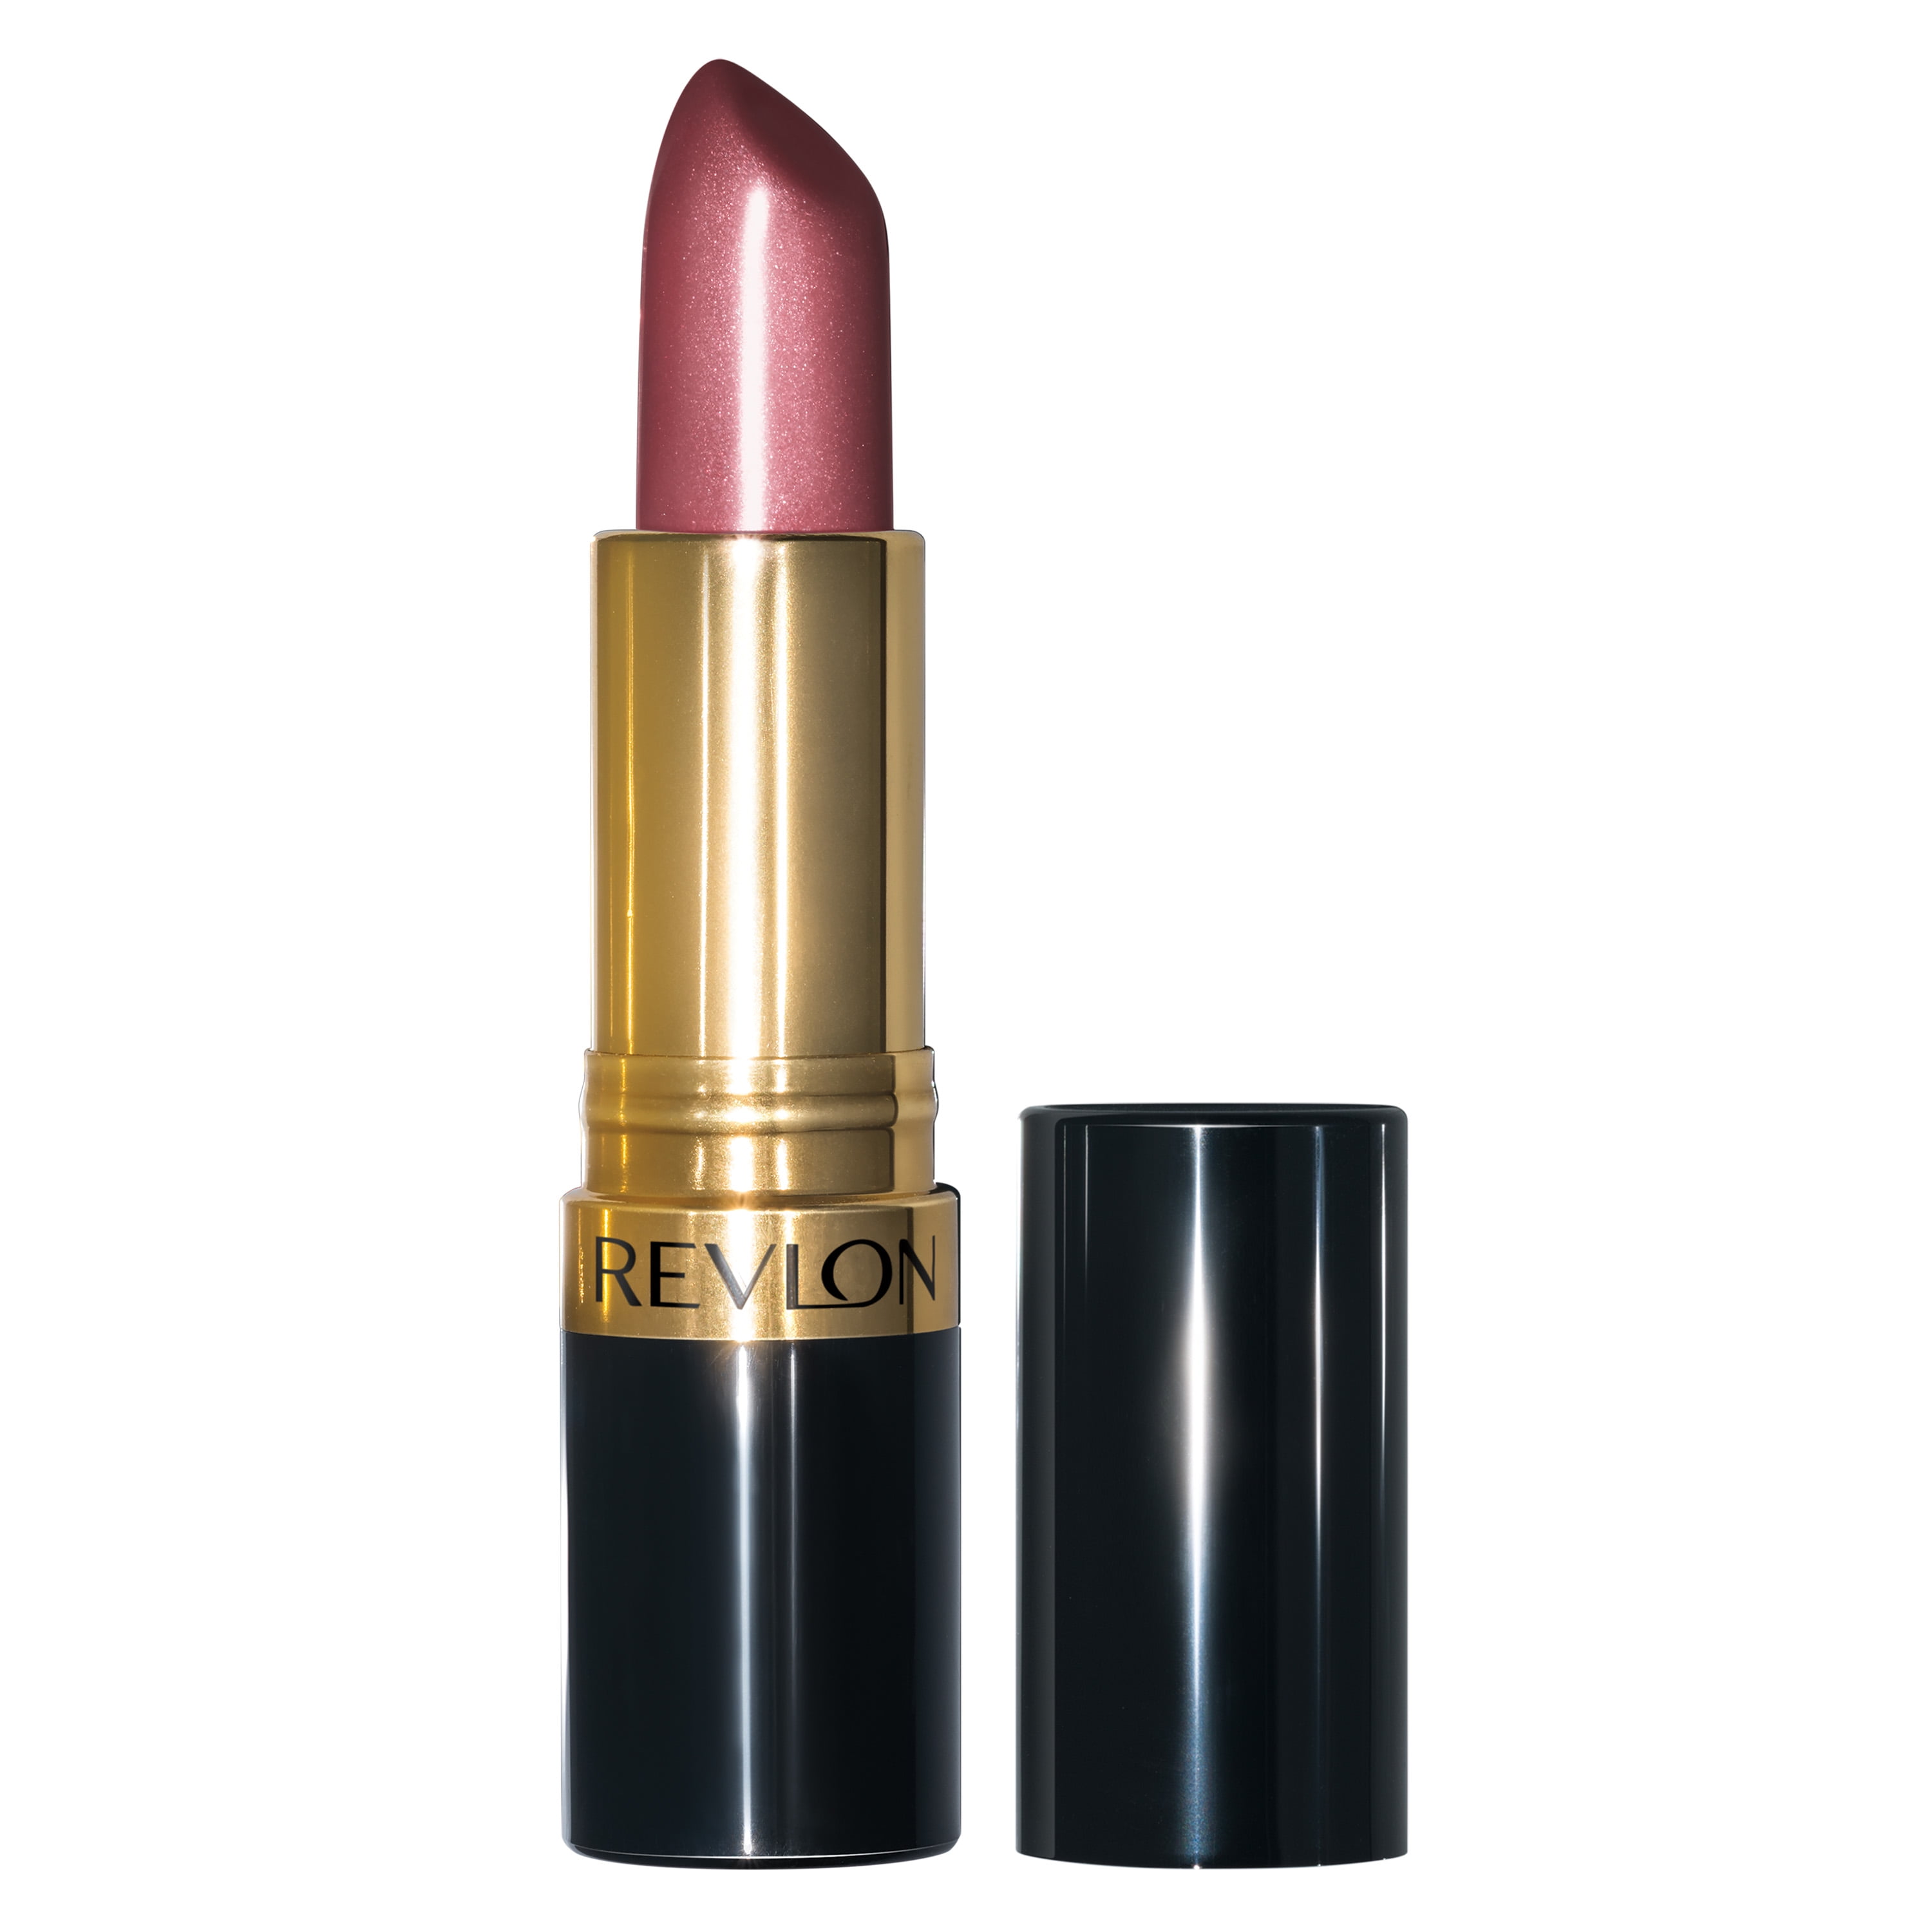 Revlon Super Lustrous Lipstick, Pearl Finish, High Impact Lipcolor with Moisturizing Creamy Formula, Infused with Vitamin E and Avocado Oil, 460 Blushing Mauve, 0.15 oz